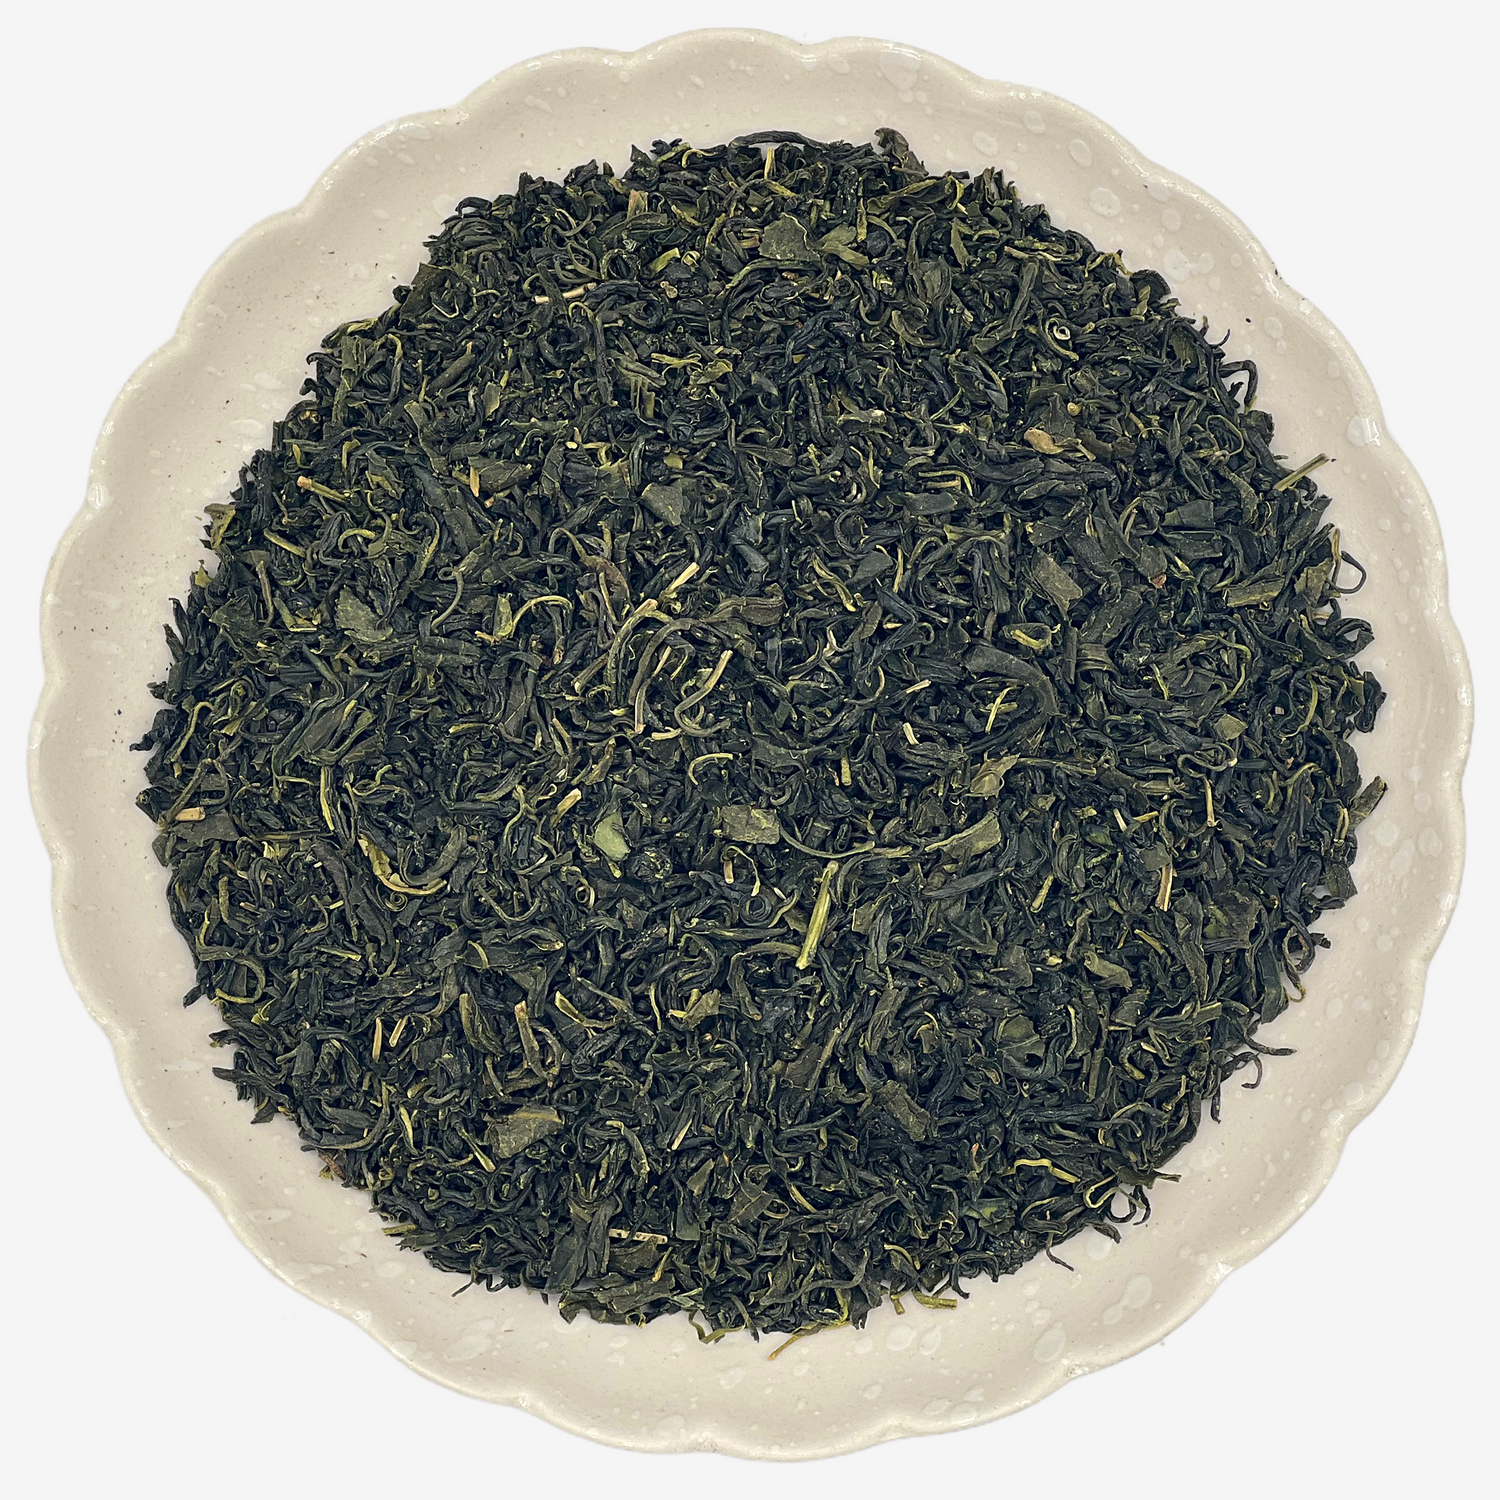 Miyazaki Sabou Organic Standard Kamairicha Green Tea